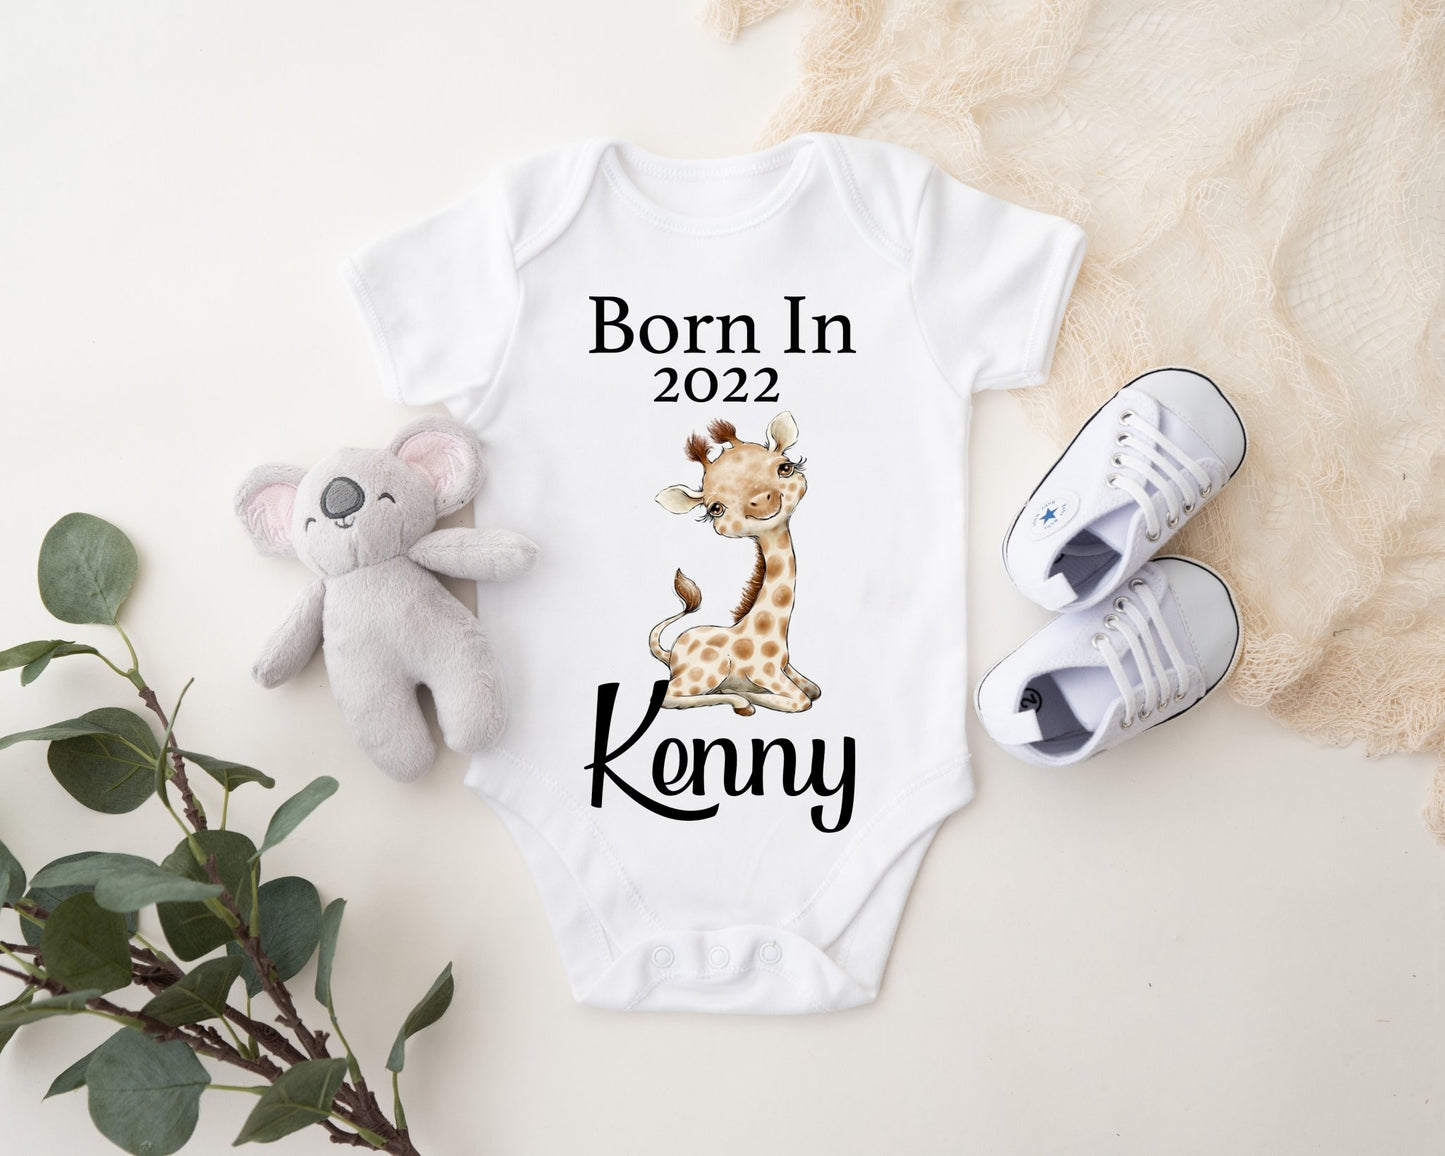 Born In 2022 Vest - Giraffe Boy Print